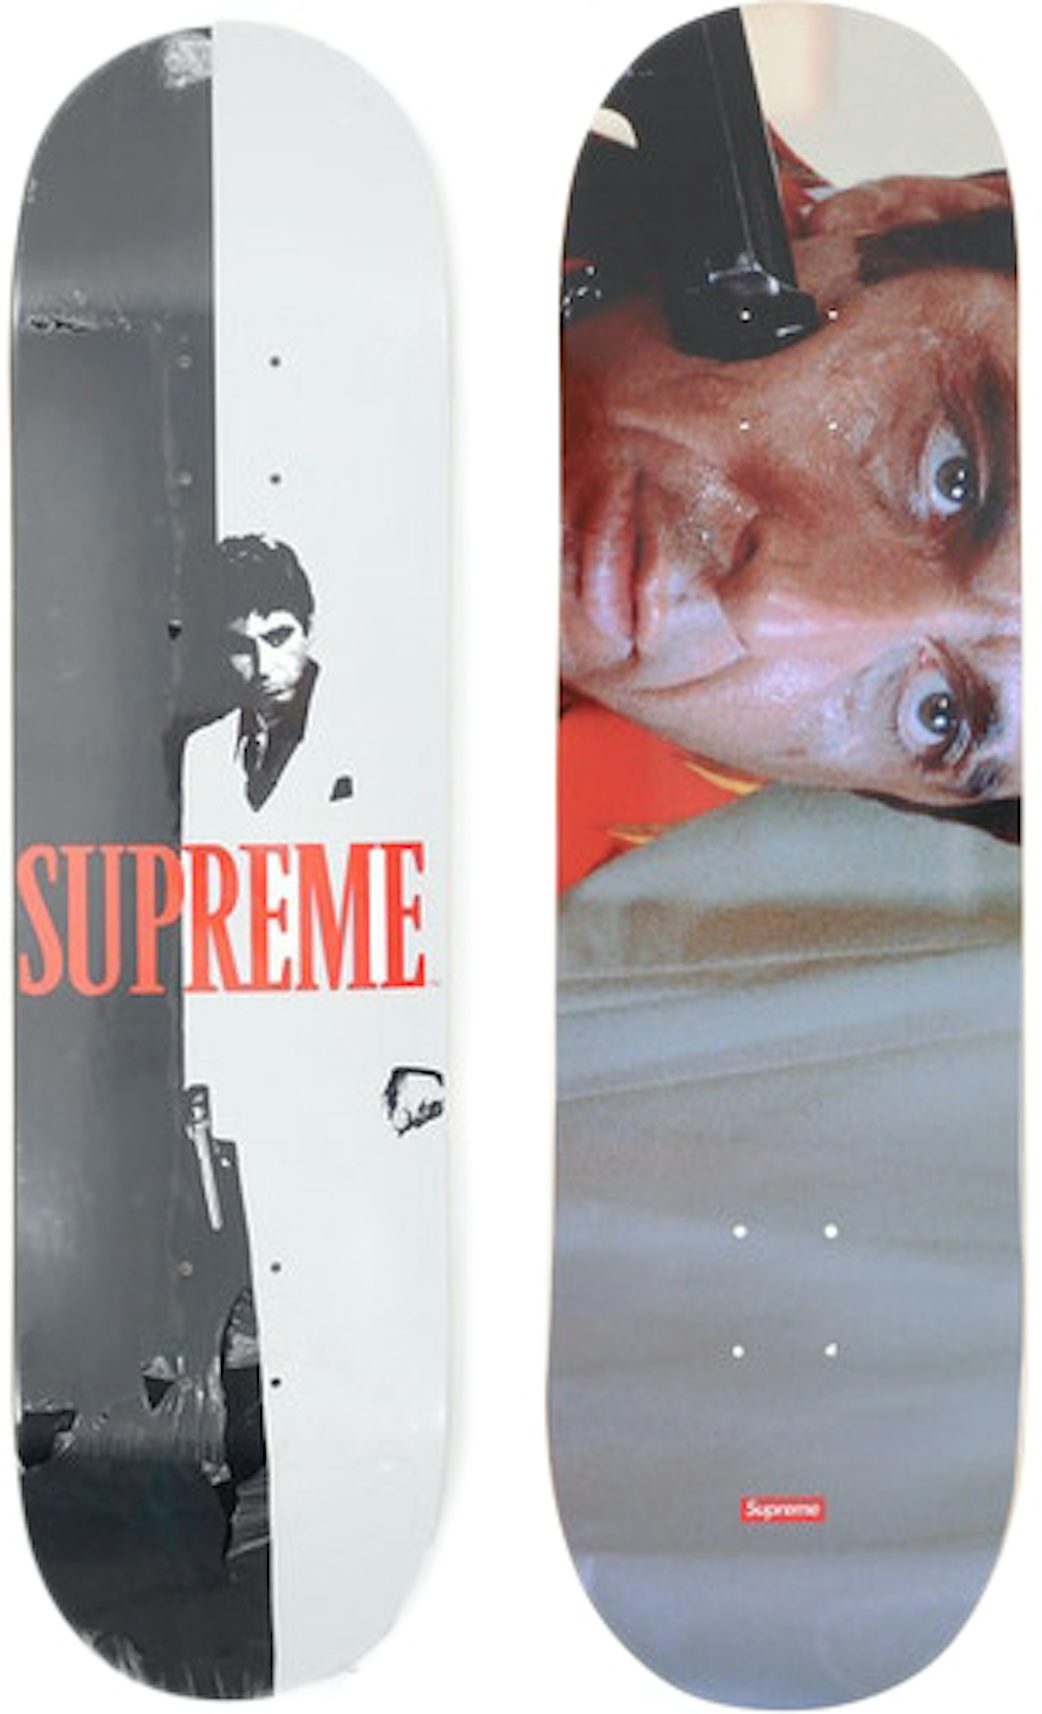 Supreme X Louis Vuitton, Untitled (skateboard decks) (2000)